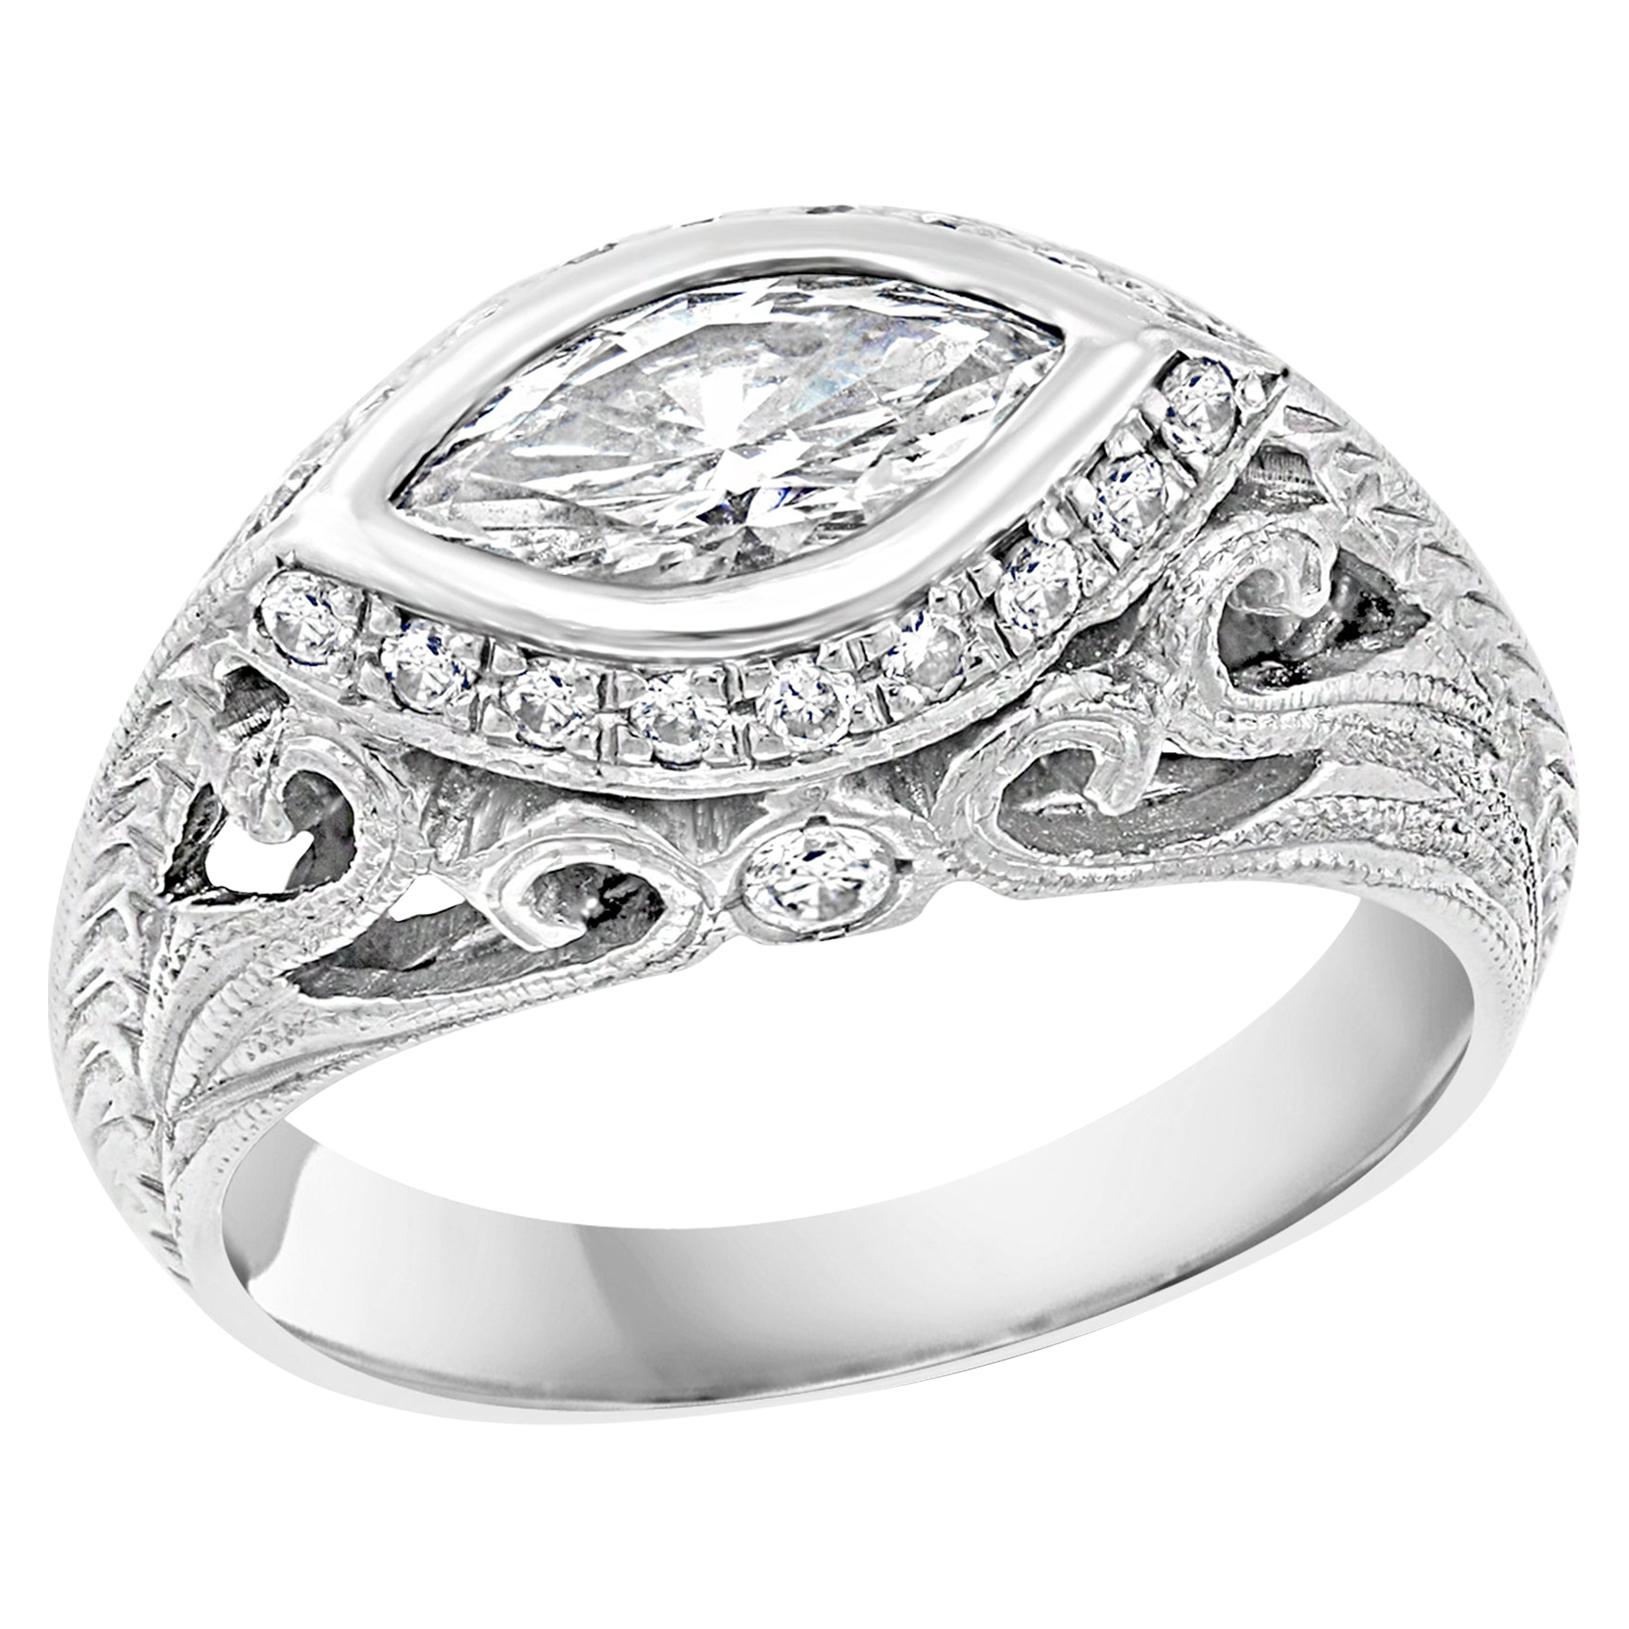 1 Carat Marquise Shape Center Diamond 14 Karat White Gold Ring, Art Deco Style